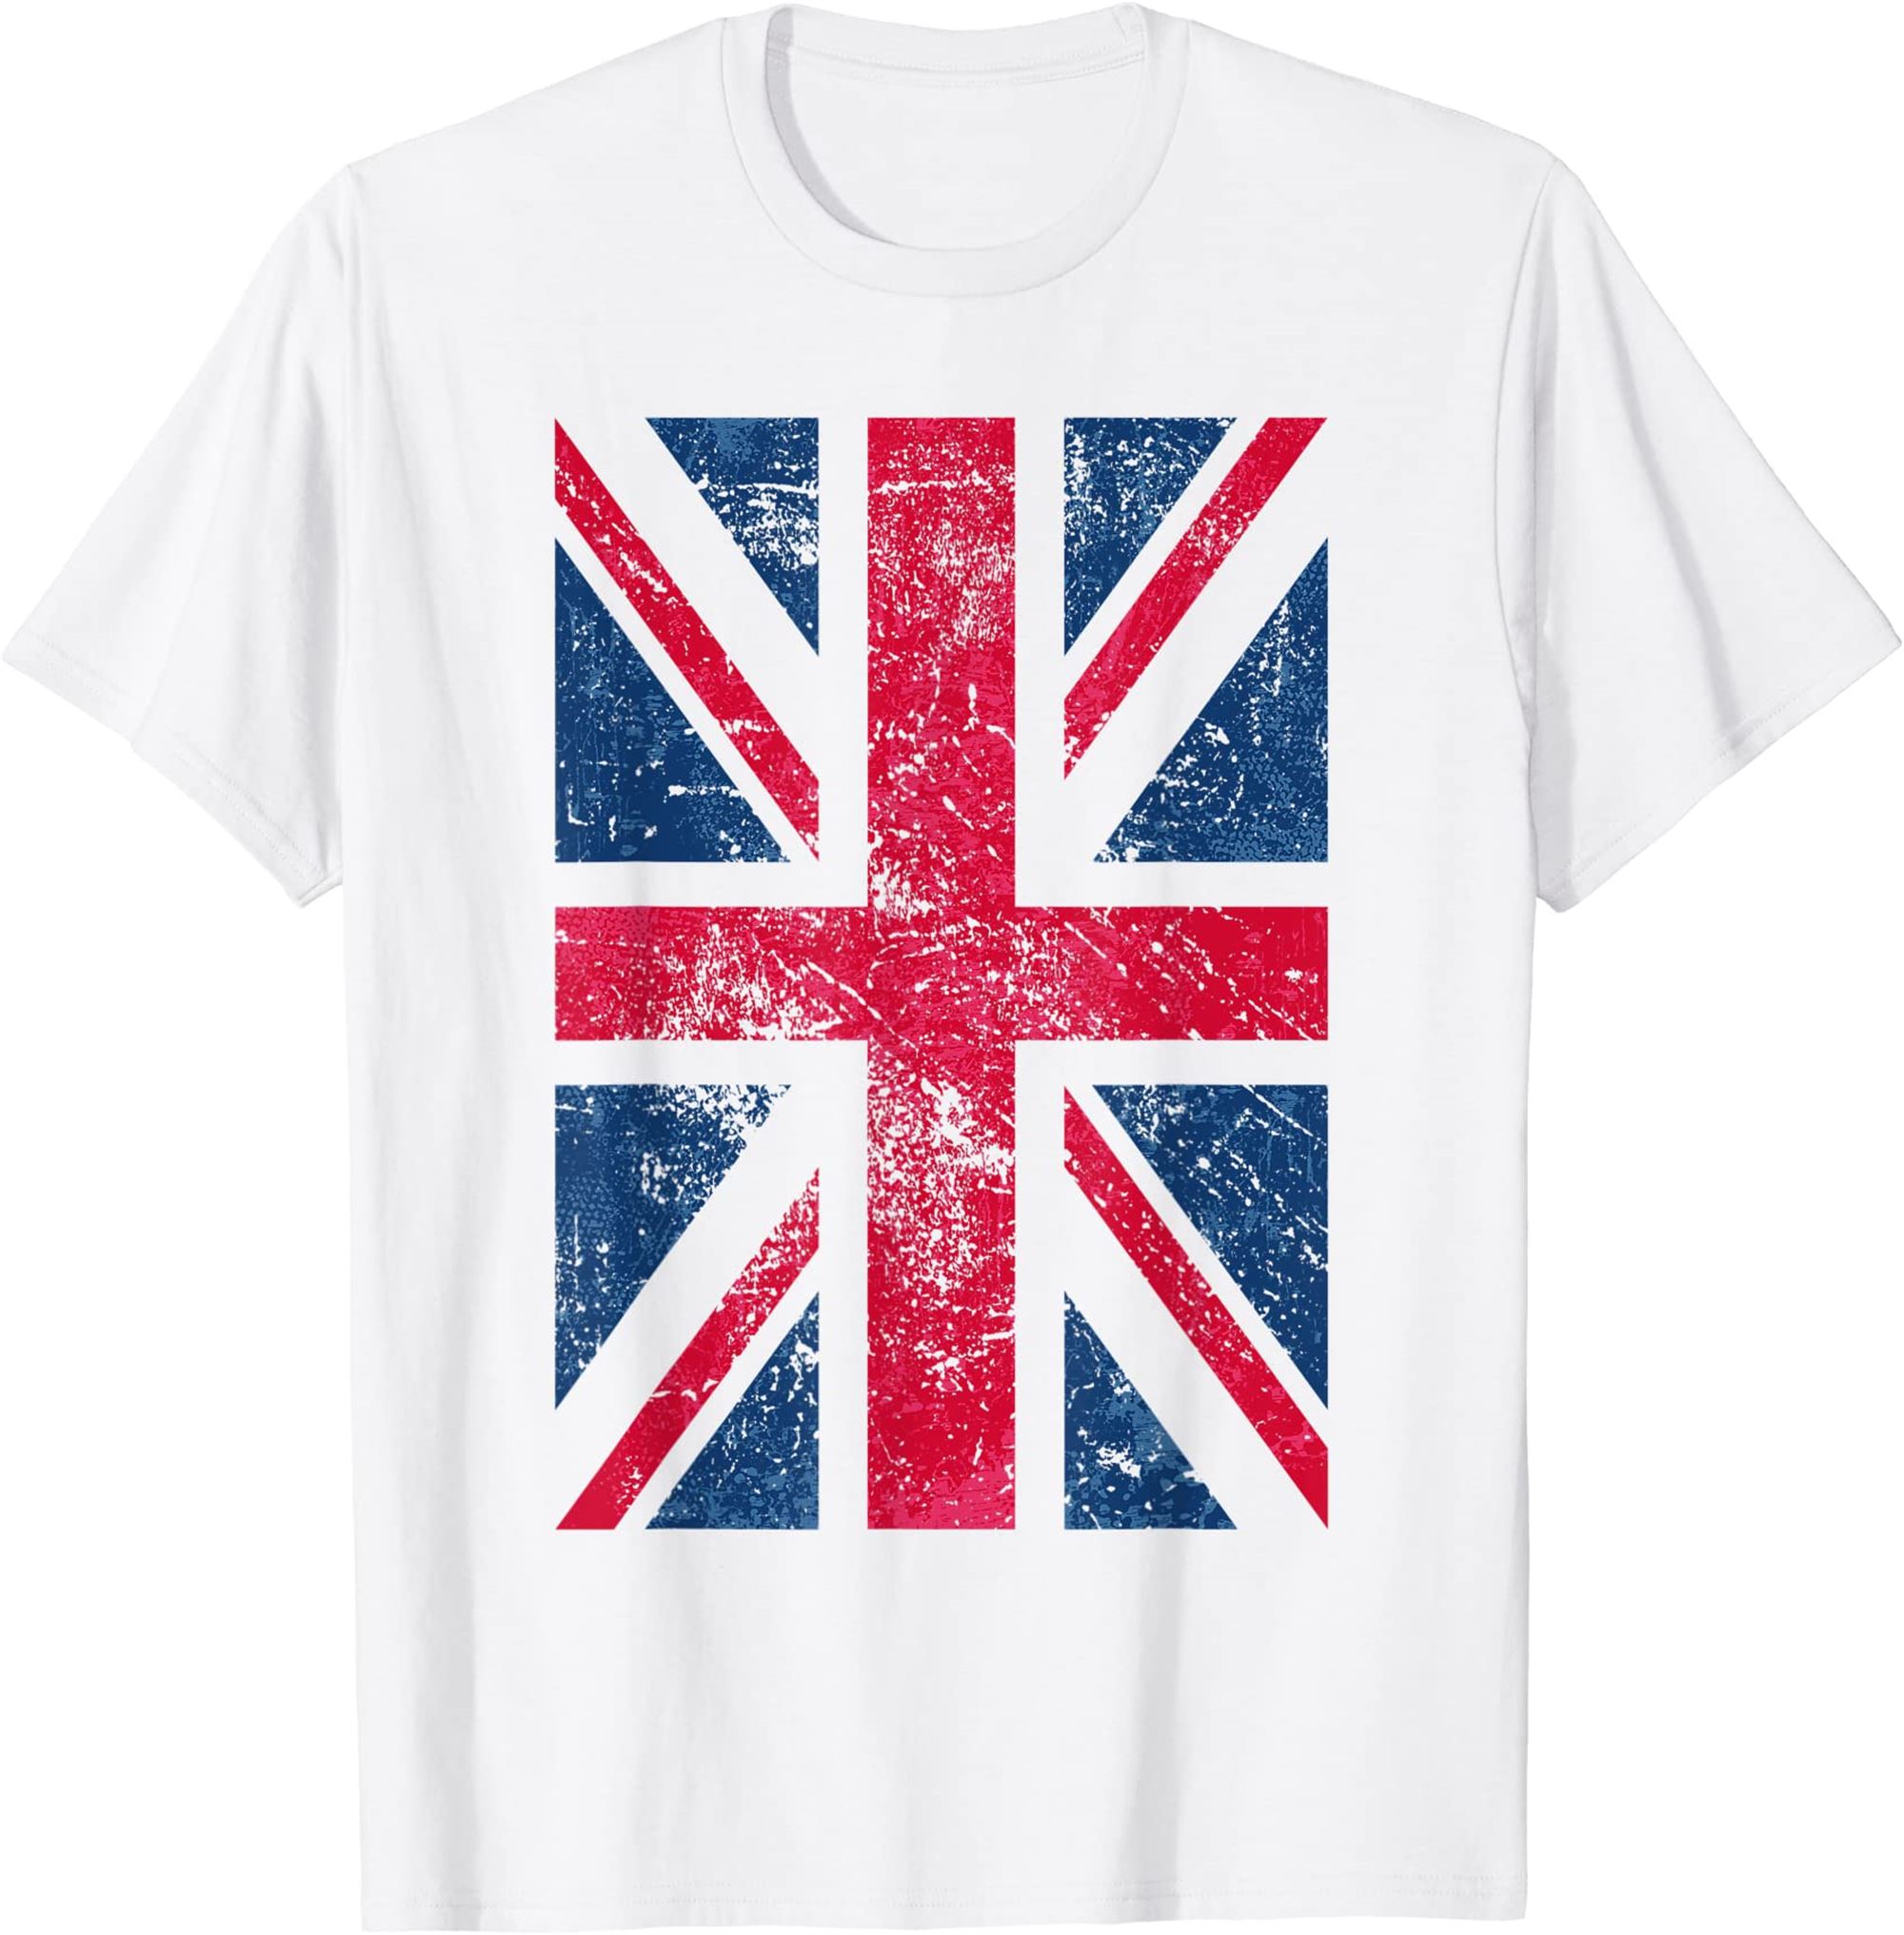 Uk T Shirt Women Men Vintage Retro British Union Jack Flag T-shirt Plus Size Up To 5xl